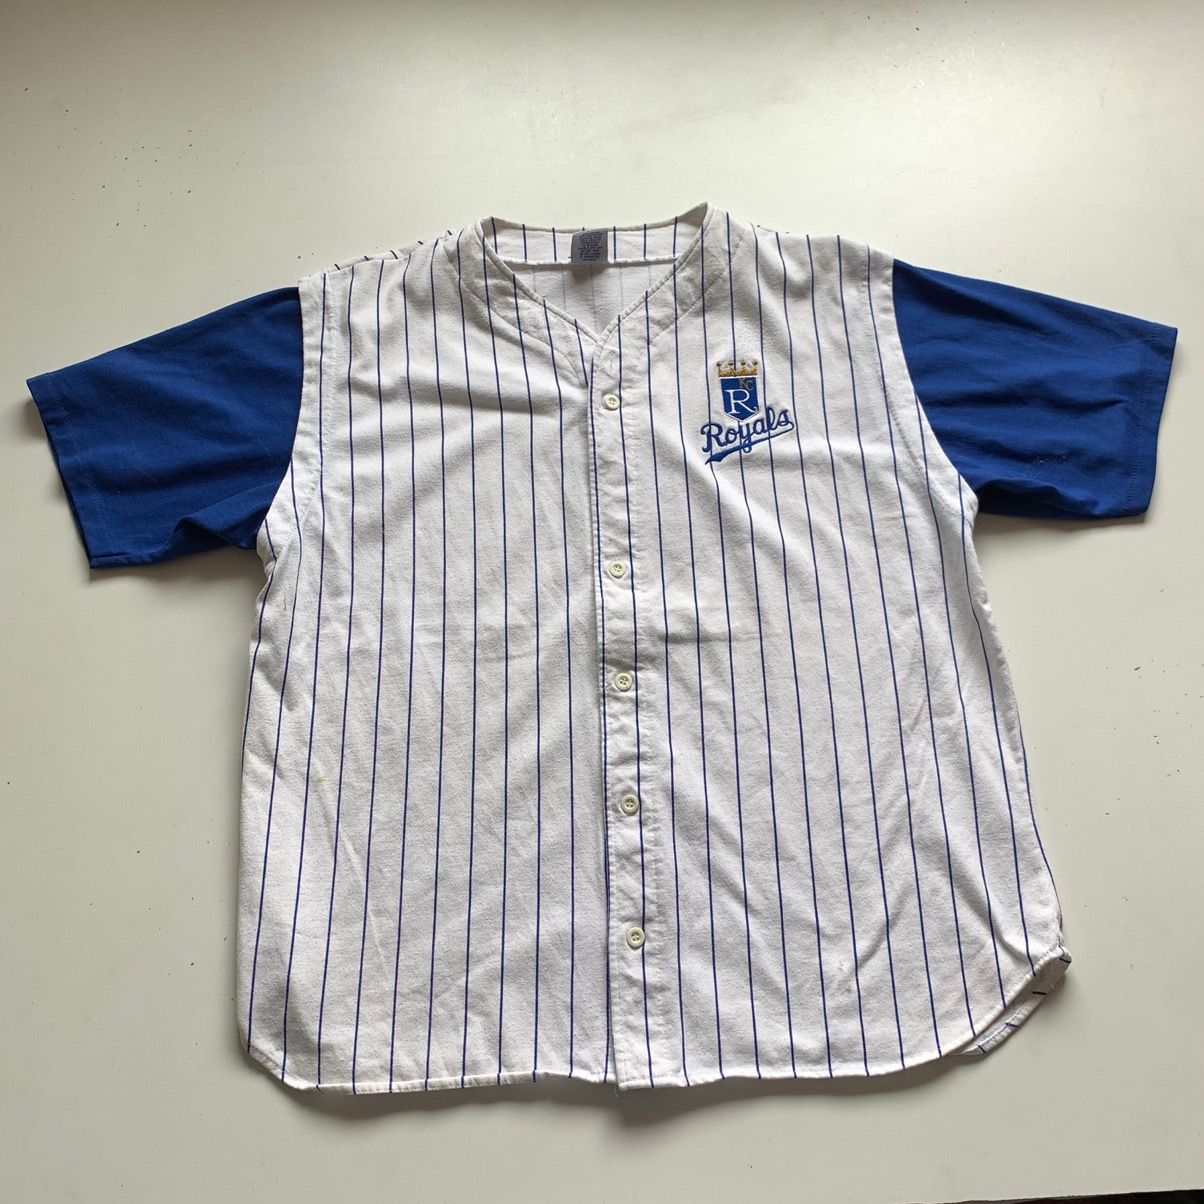 Vintage Vintage 90s Kansas City Royals mlb baseball jersey shirt Size US XL / EU 56 / 4 - 1 Preview